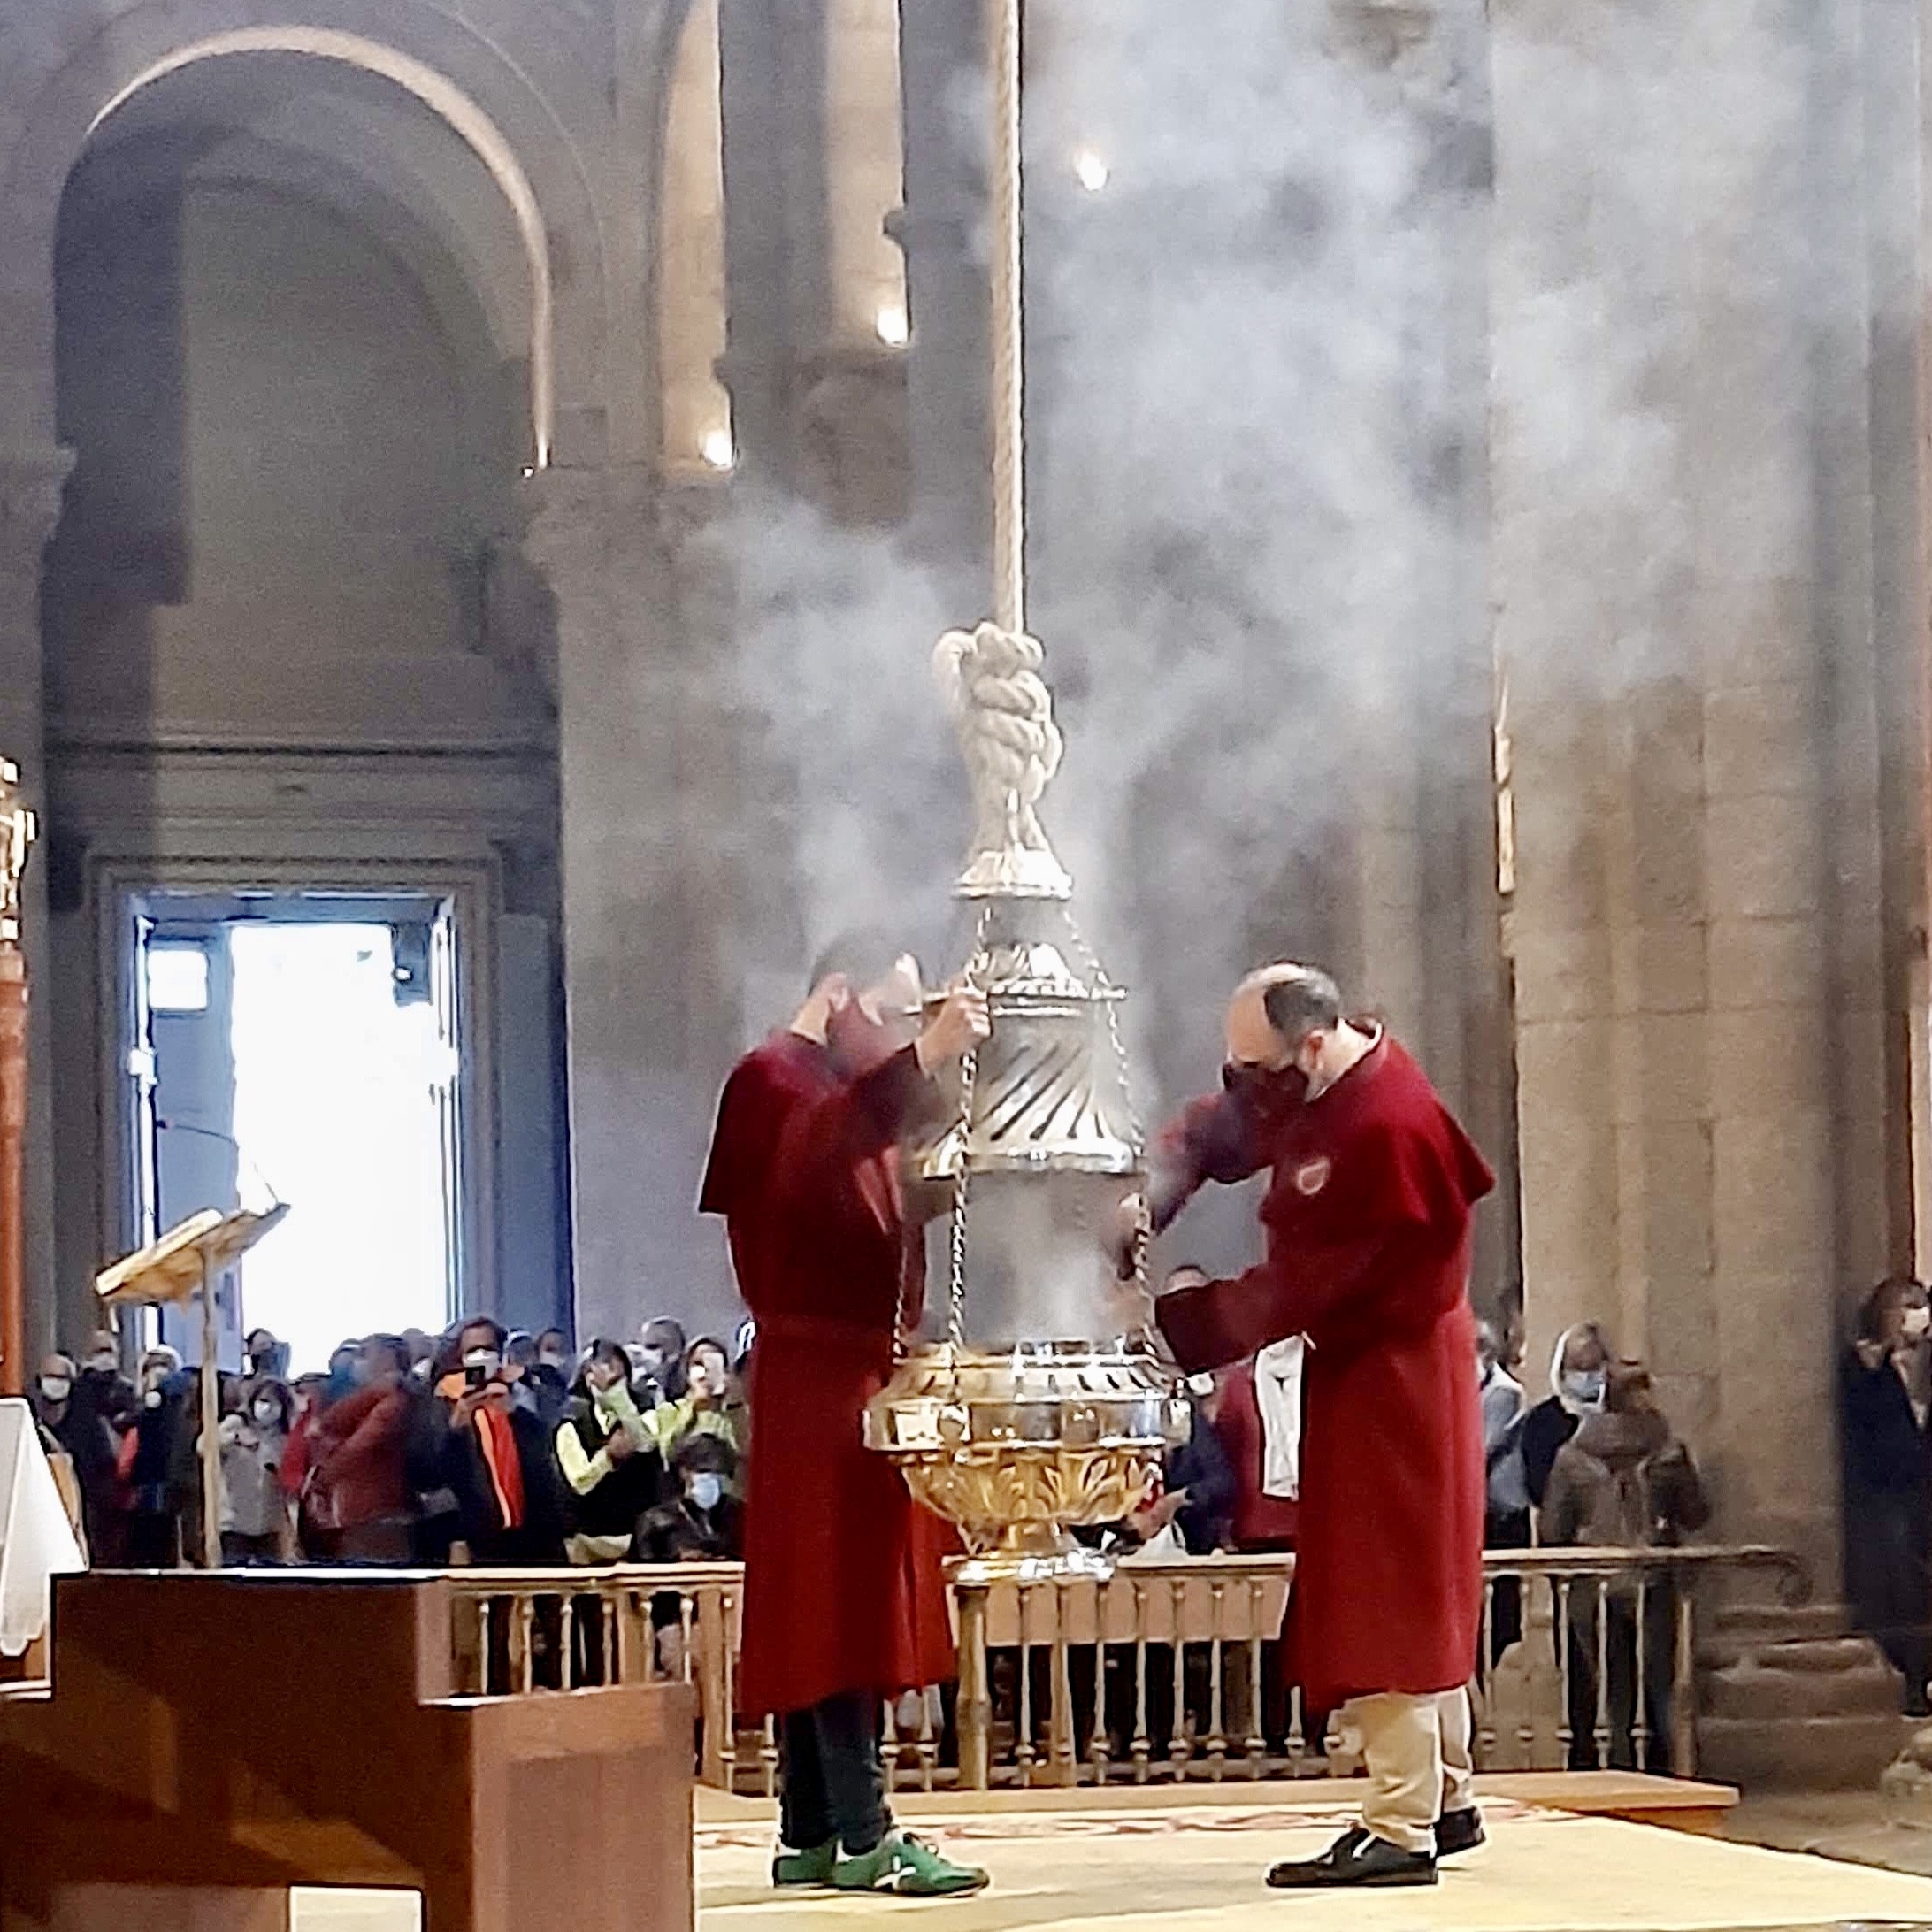 Preparing the botafumeiro at the pilgrim's mass in the cathedral at Santiago de Compostela